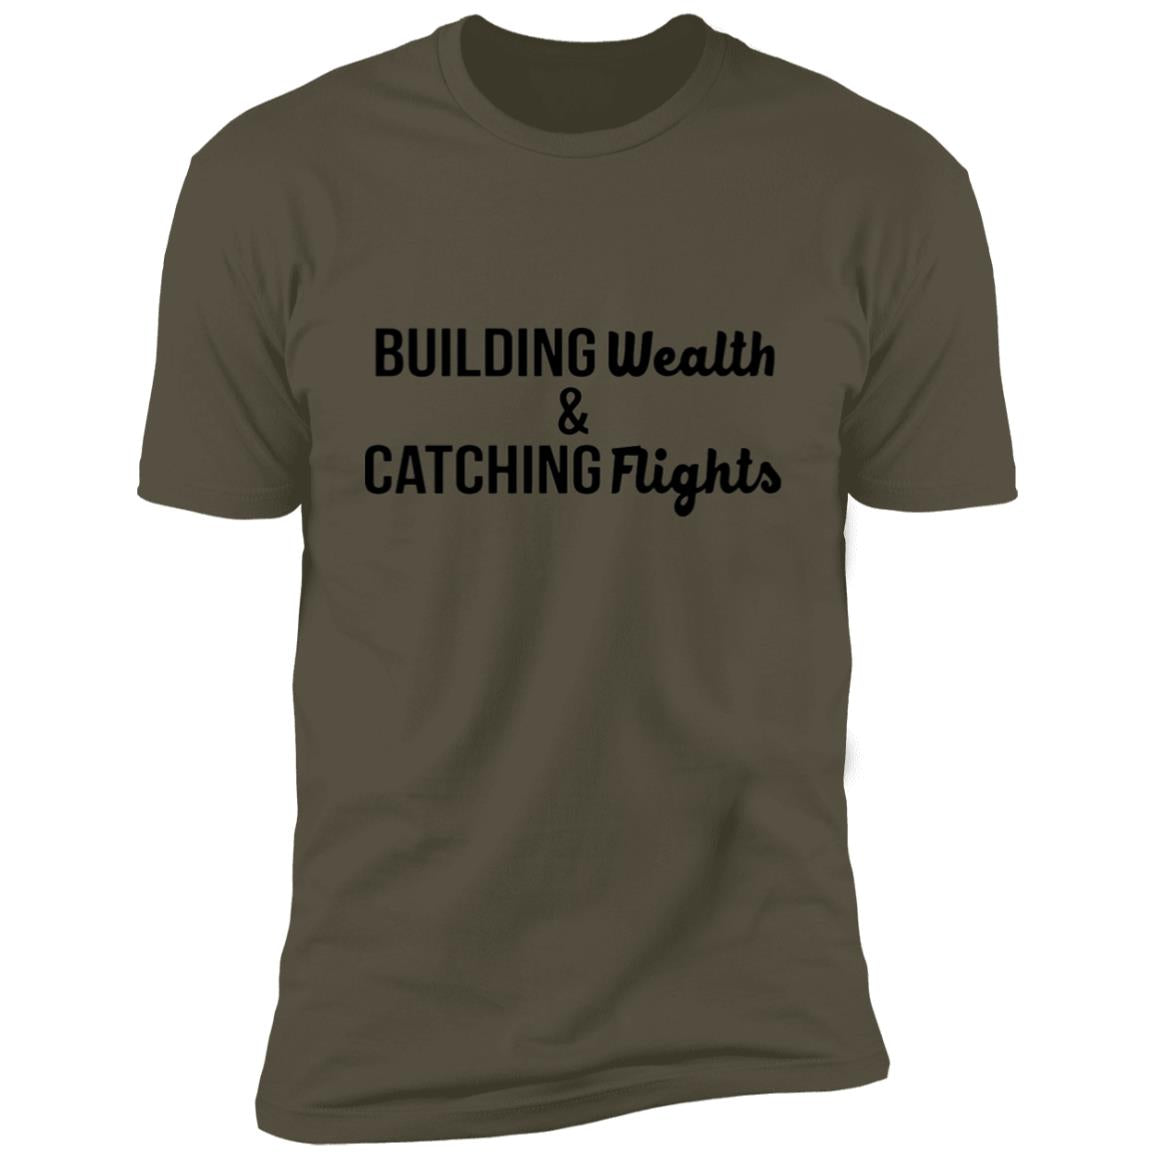 Building Wealth & Catching Flights - Premium Short Sleeve T-Shirt